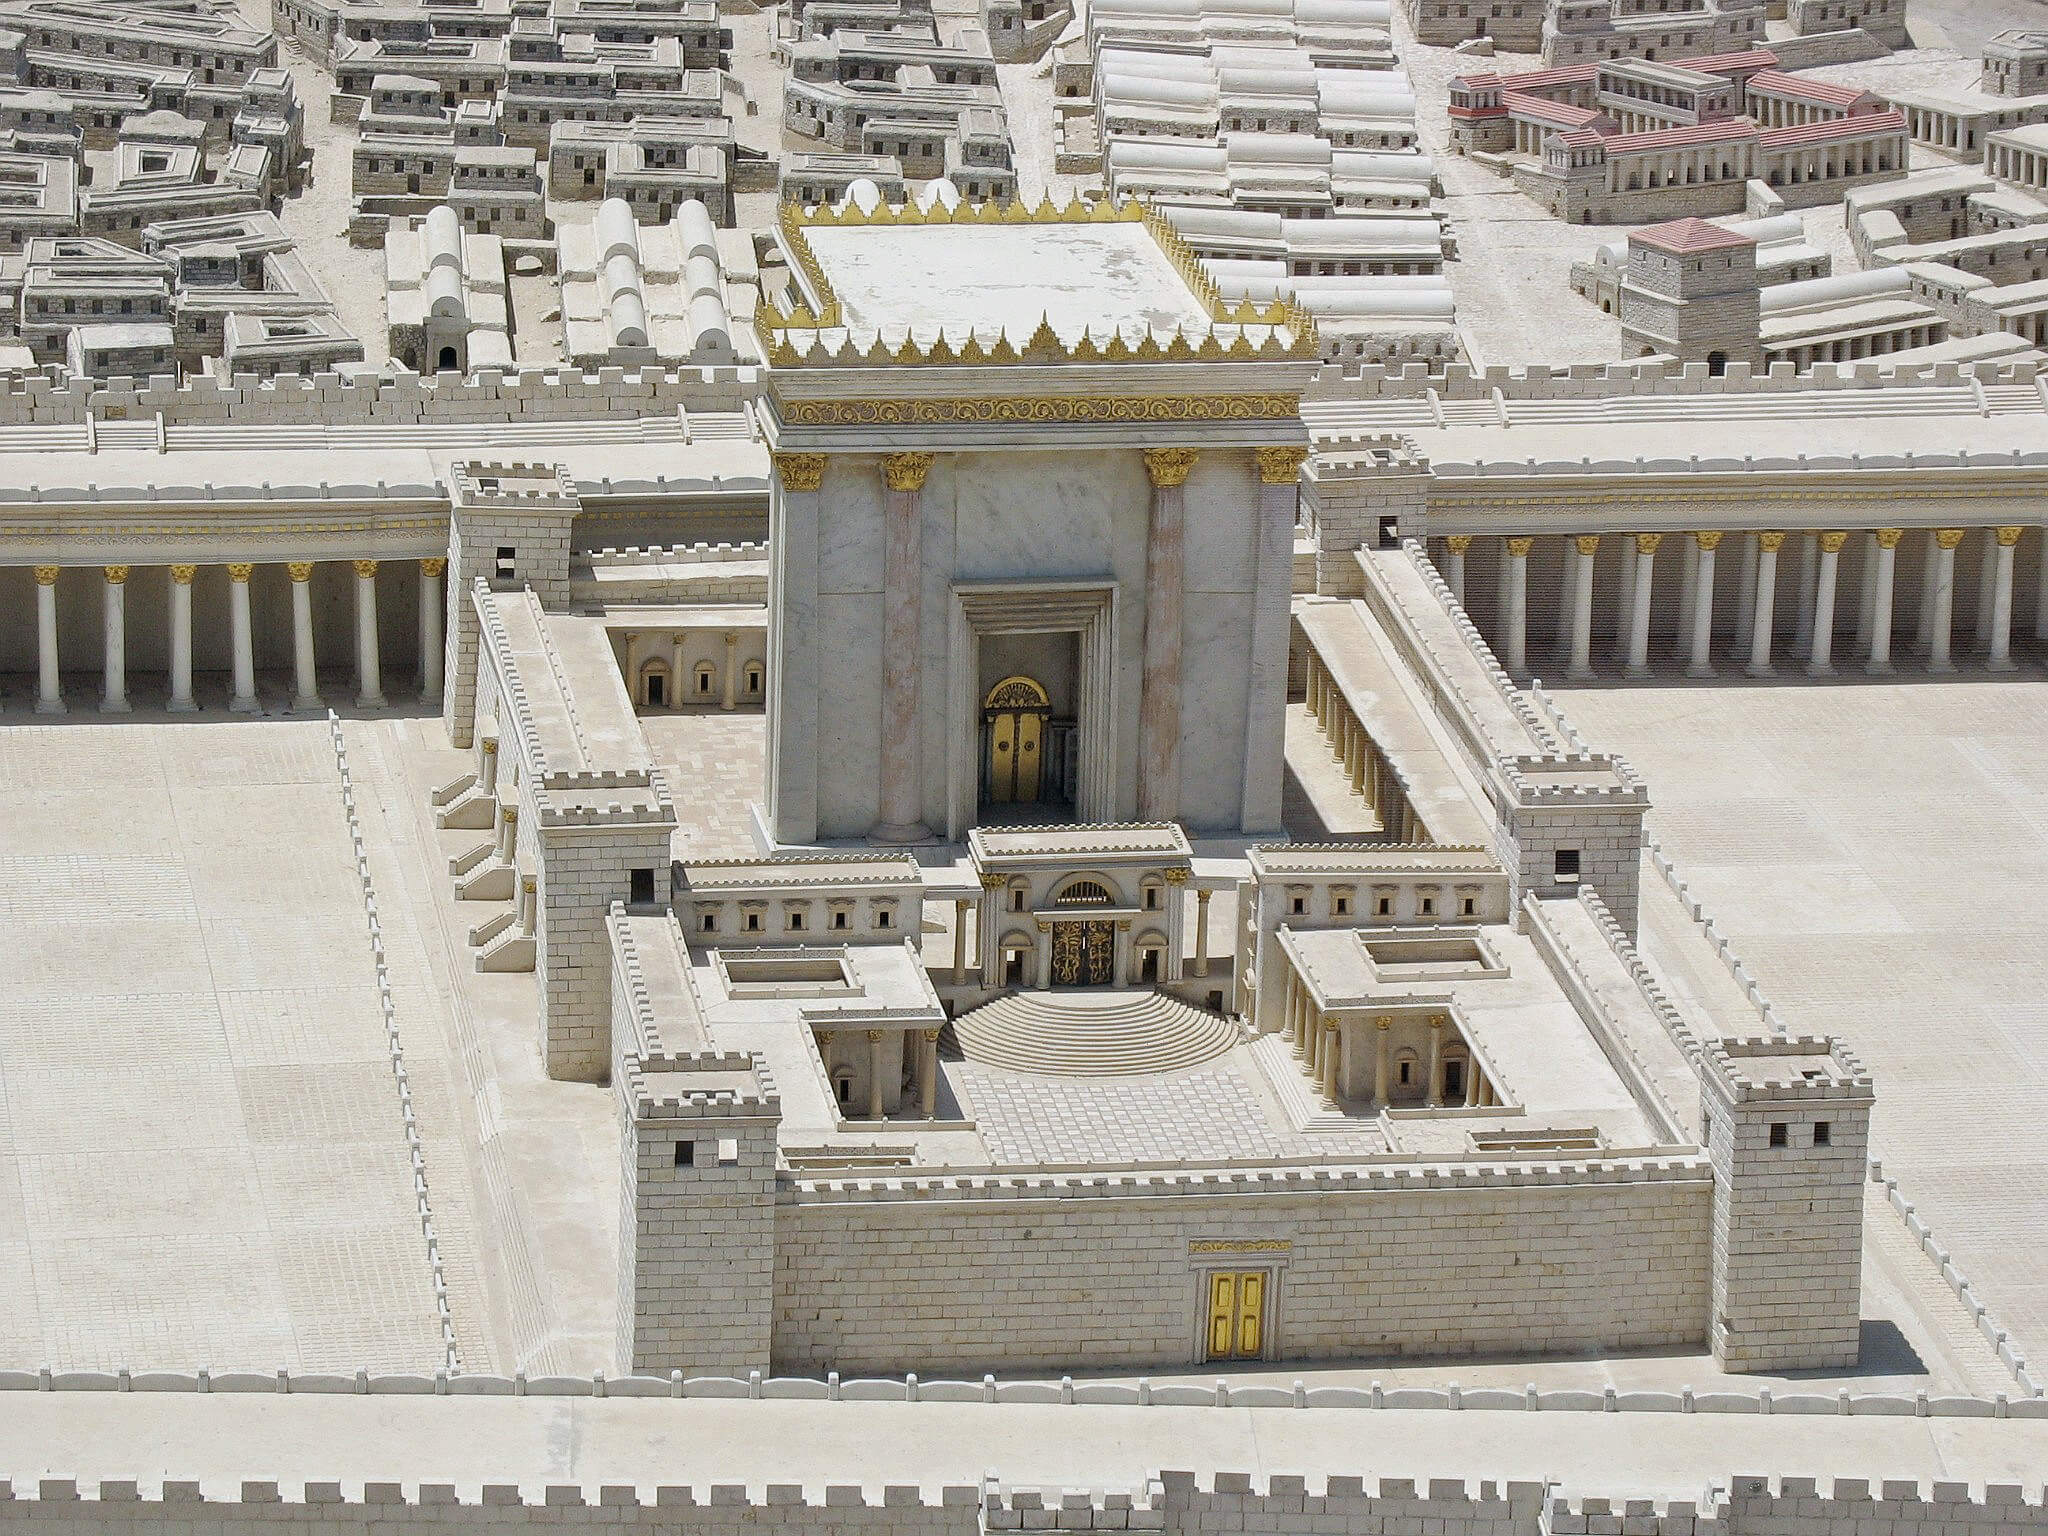 Jewish Temple